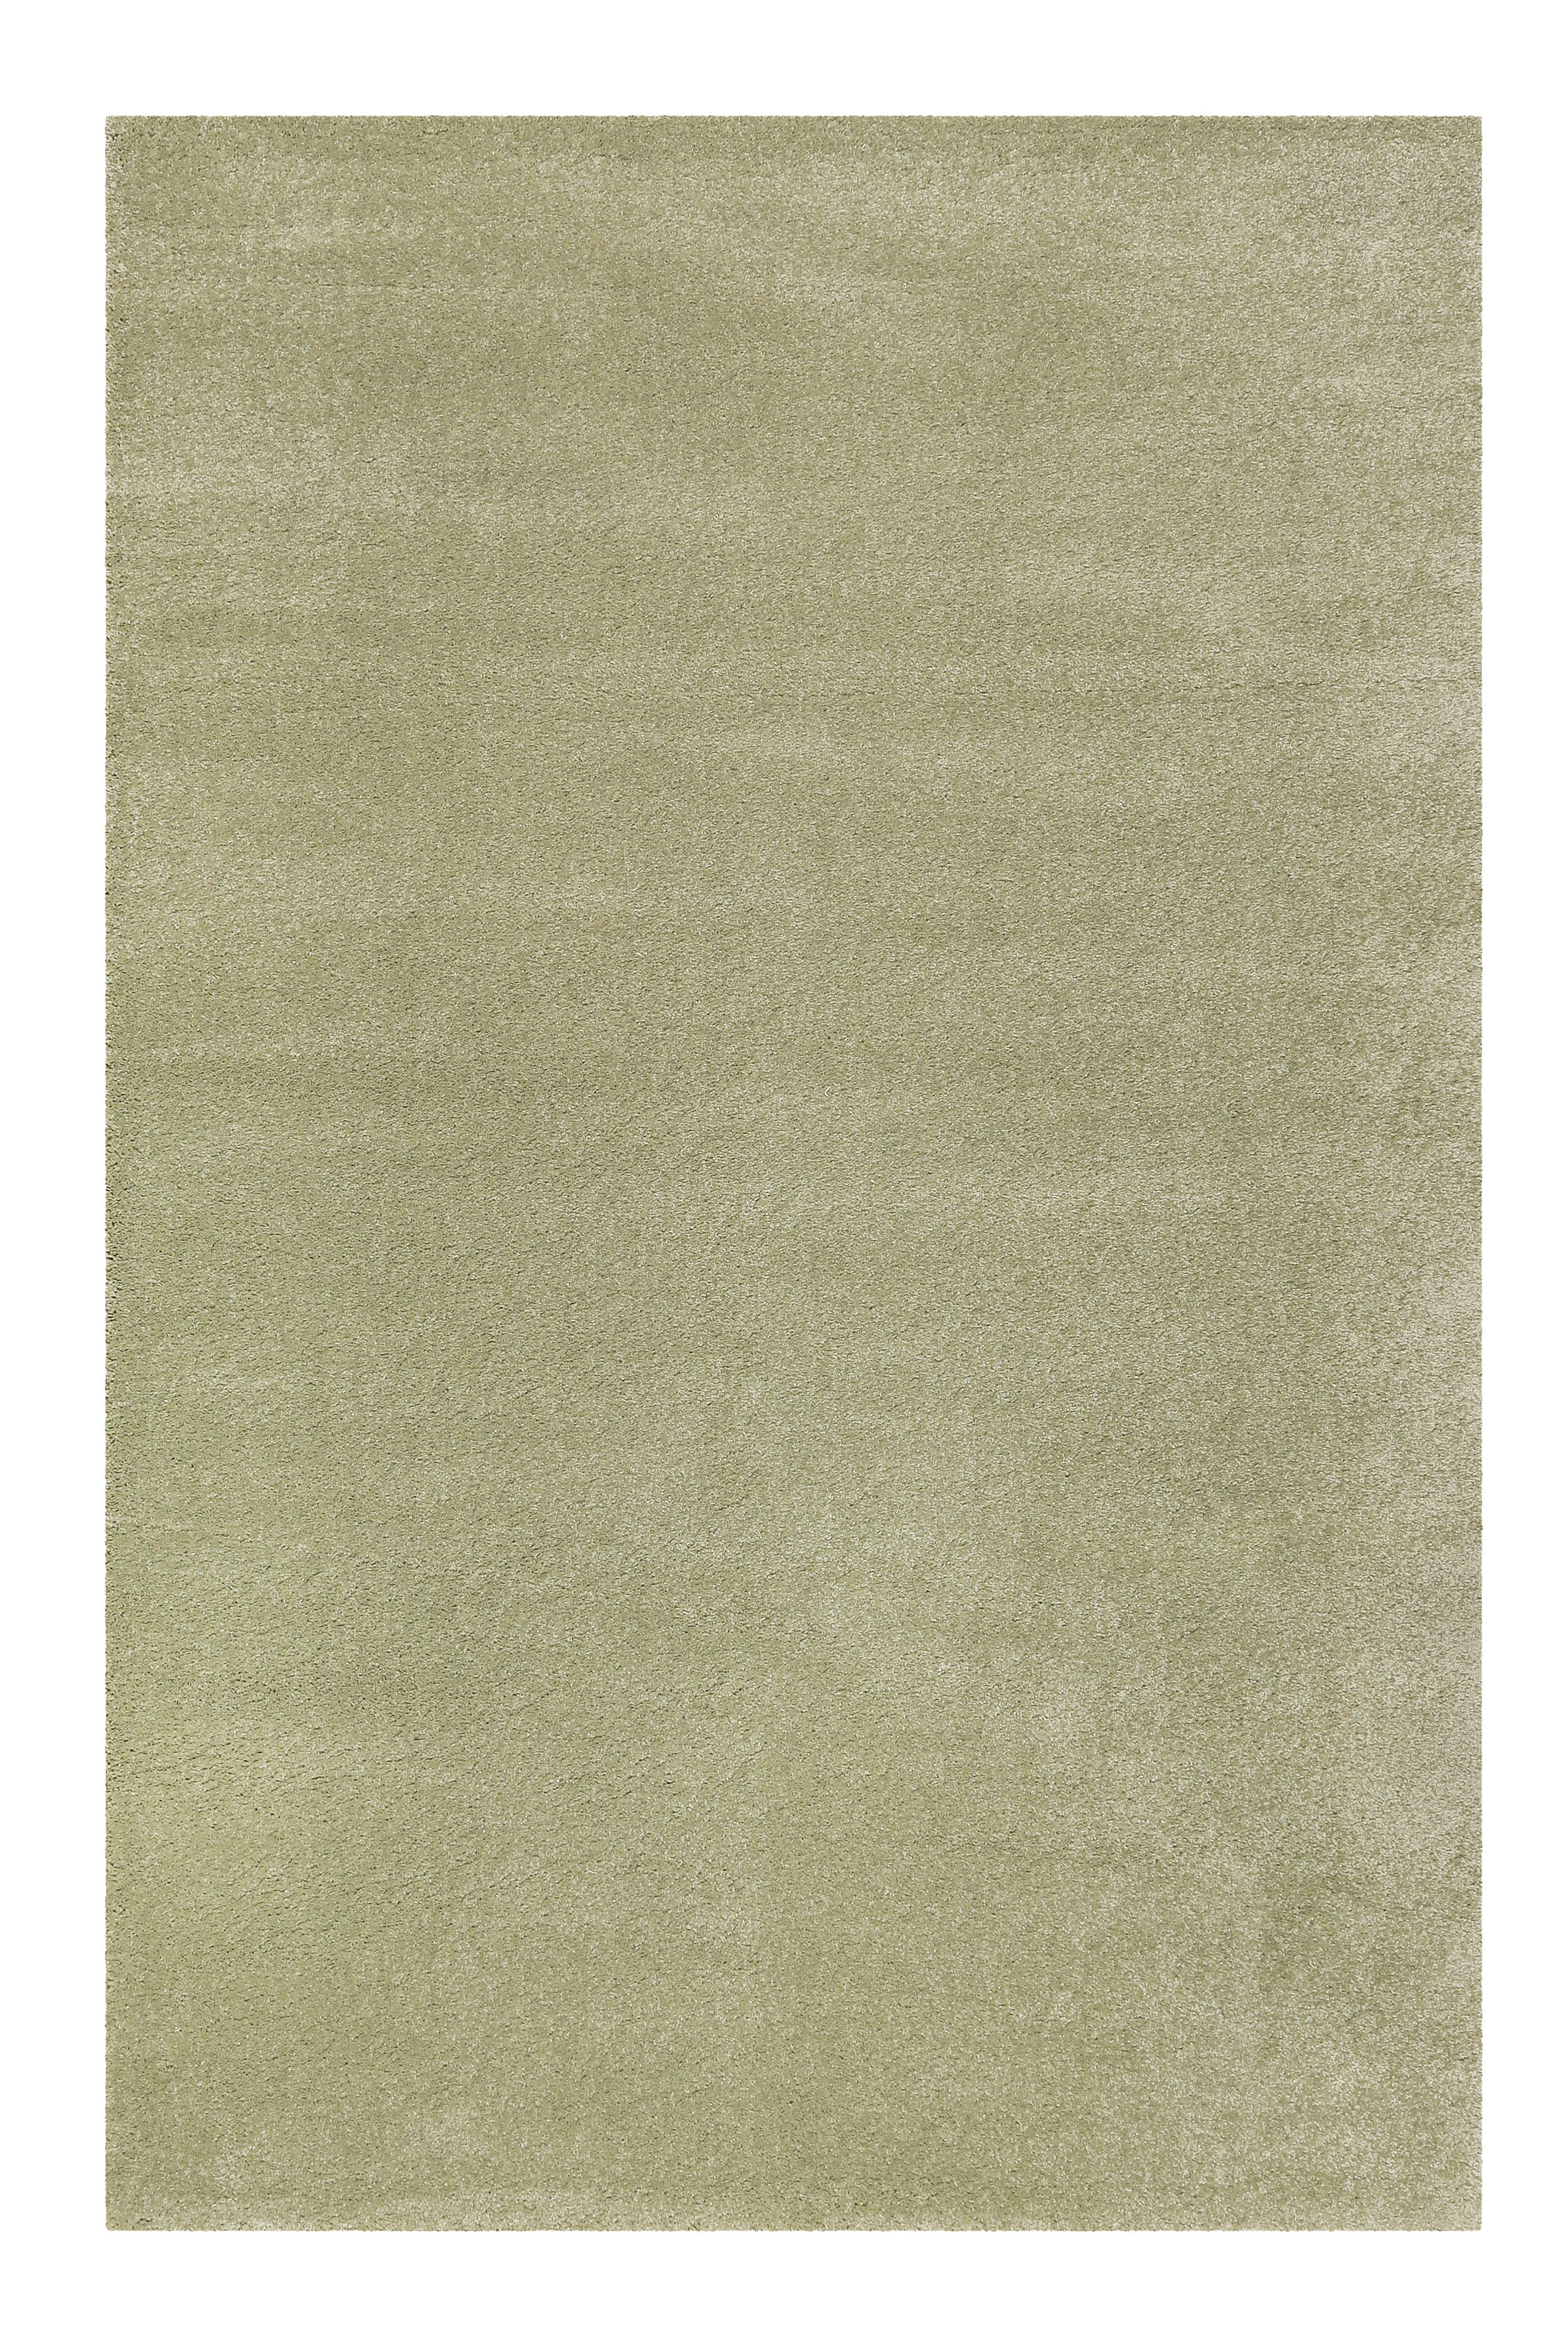 WEBTEPPICH  120/170 cm  Mintgrün   - Mintgrün, KONVENTIONELL, Textil (120/170cm) - Esprit